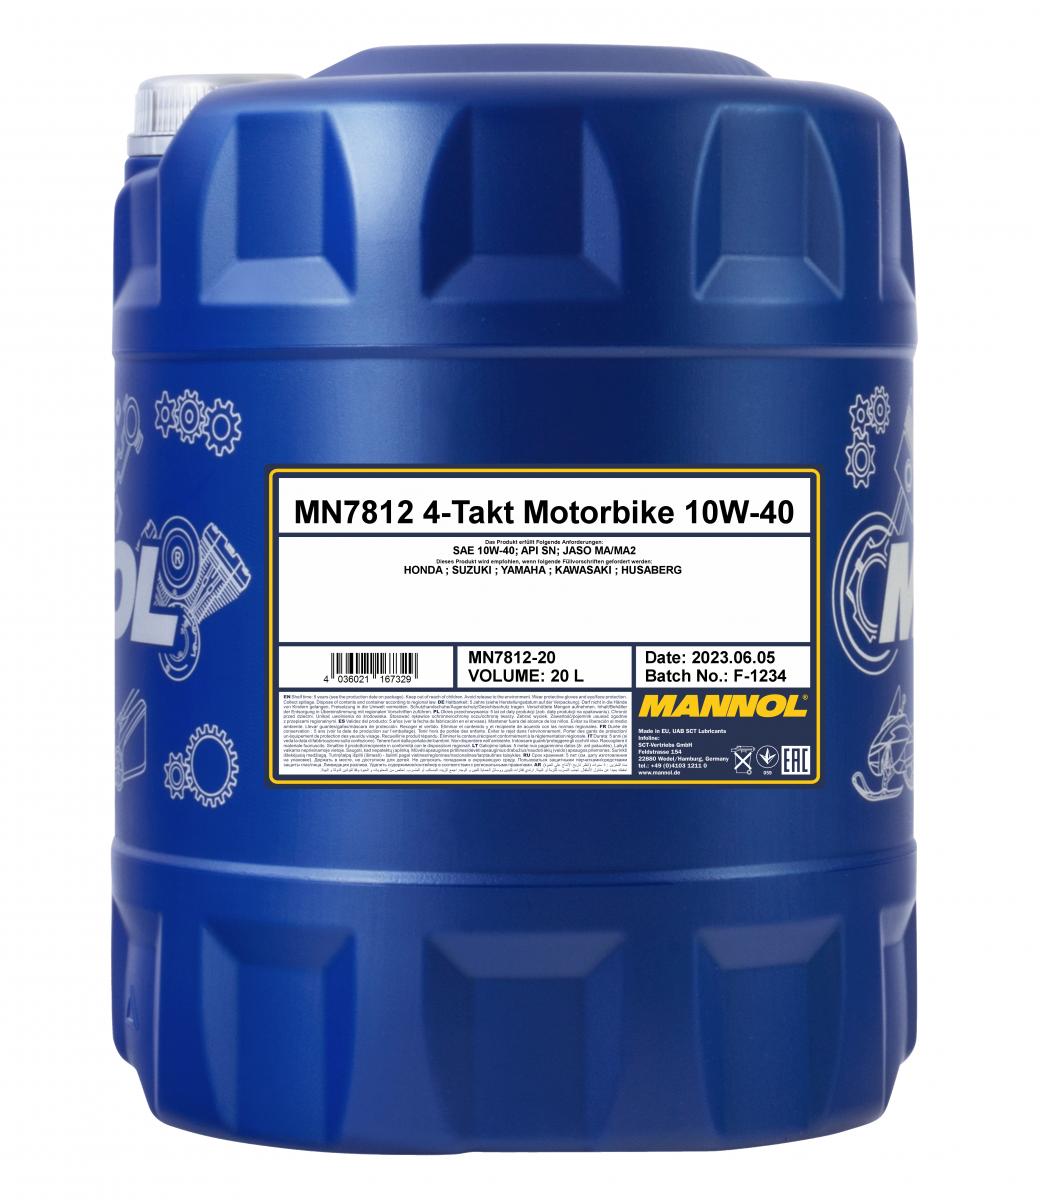 40 Liter (2x20) MANNOL 4-Takt Motorbike 10W-40 7812 API SN Motorradöl